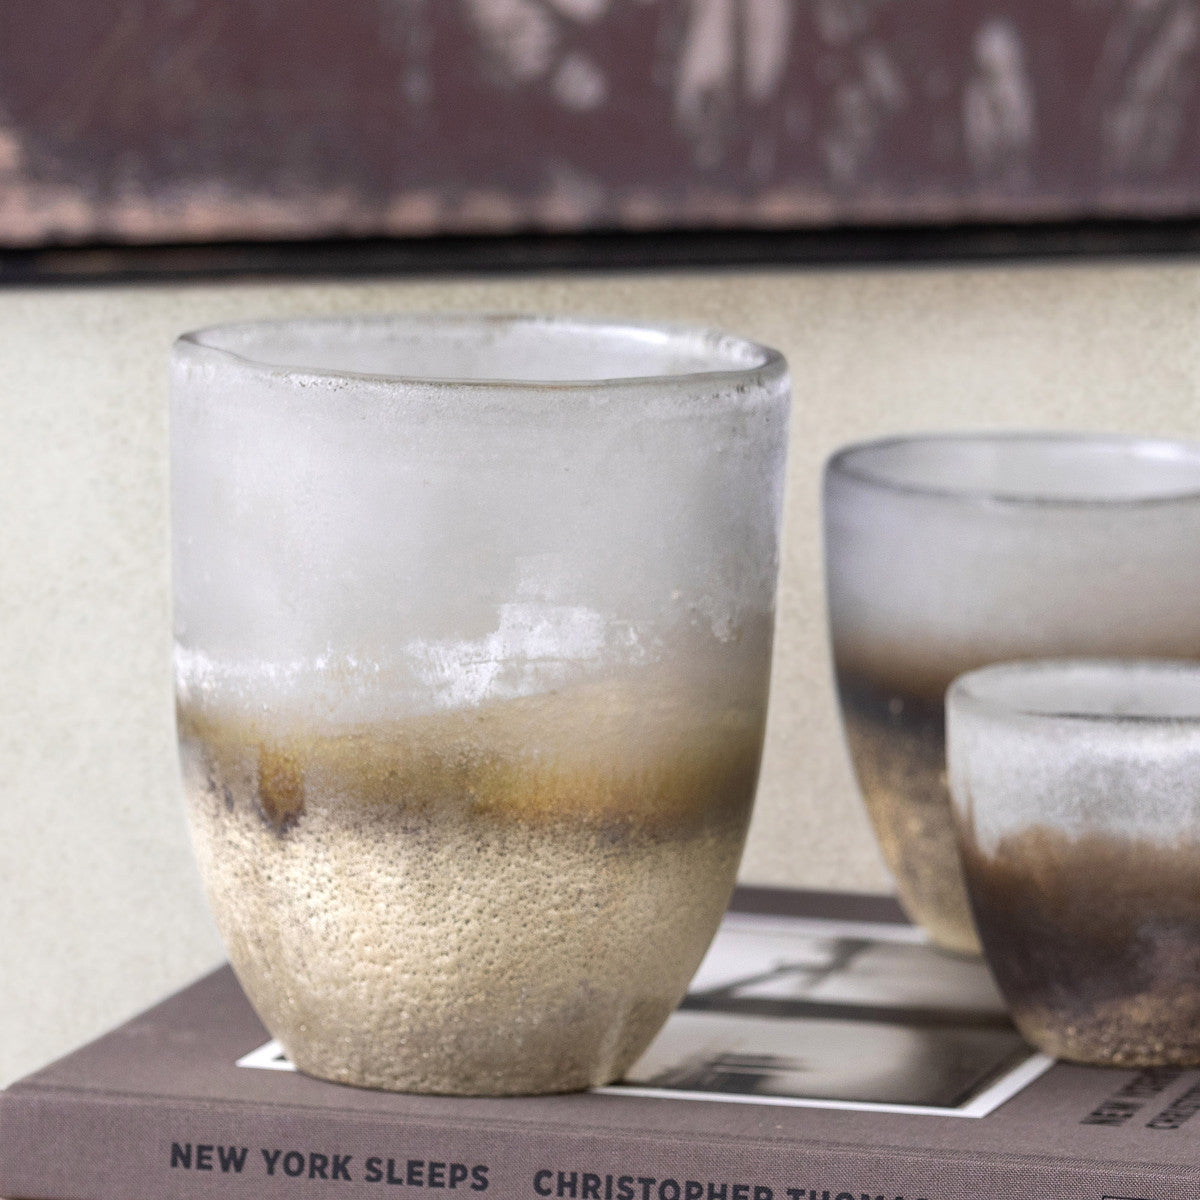 Fairbanks Organic Glass Vase - Medium